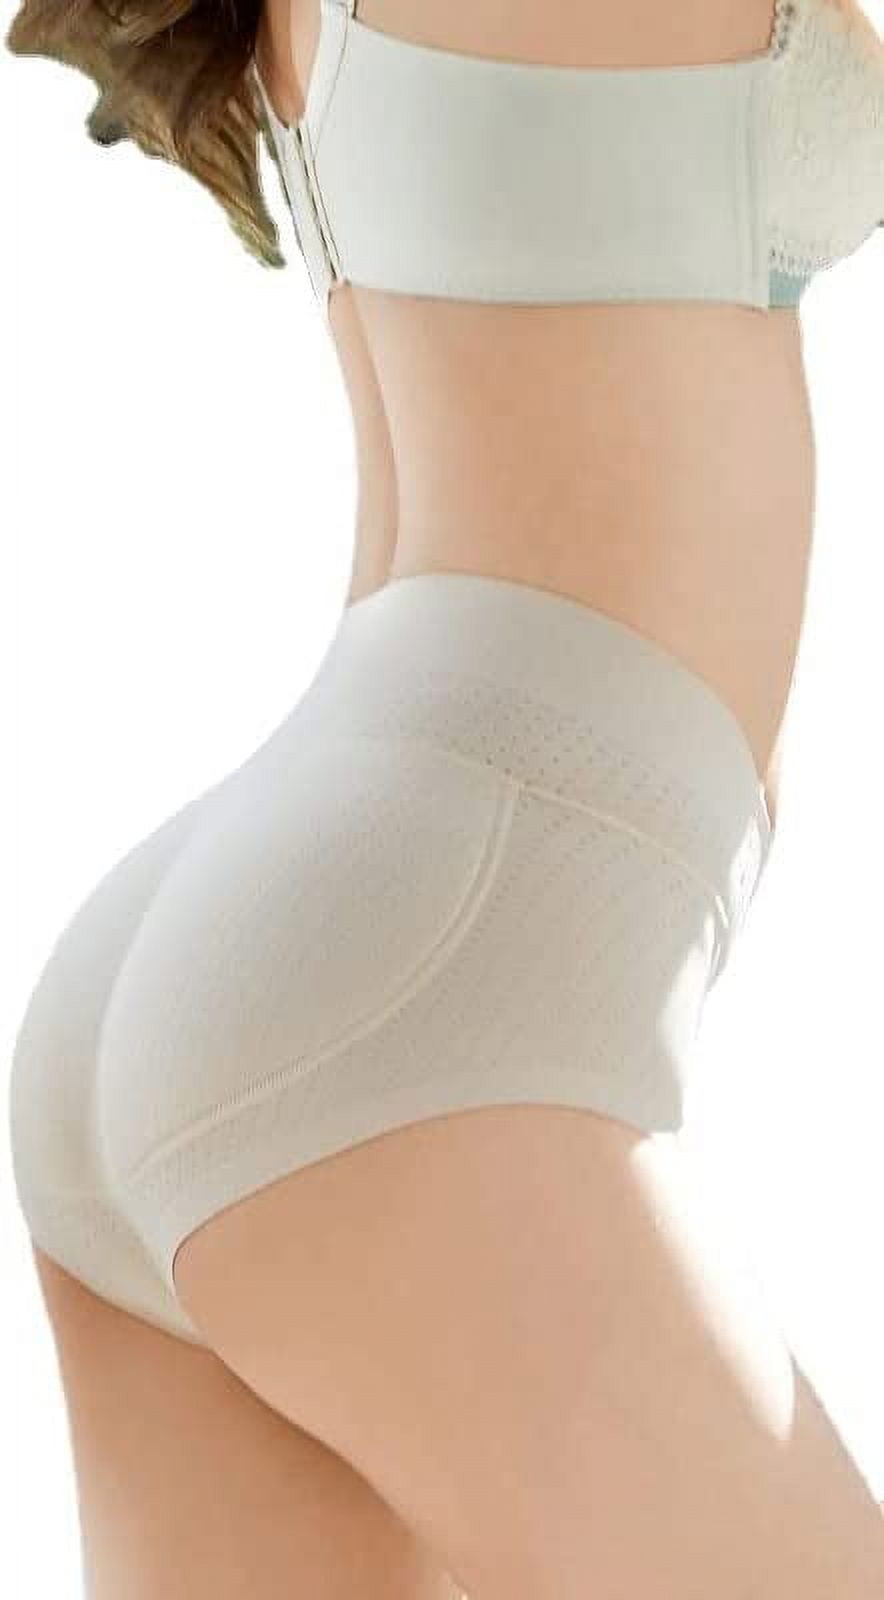 Hip Pads Shapewear Panties Women Low Waist Butt Lifter Underwear